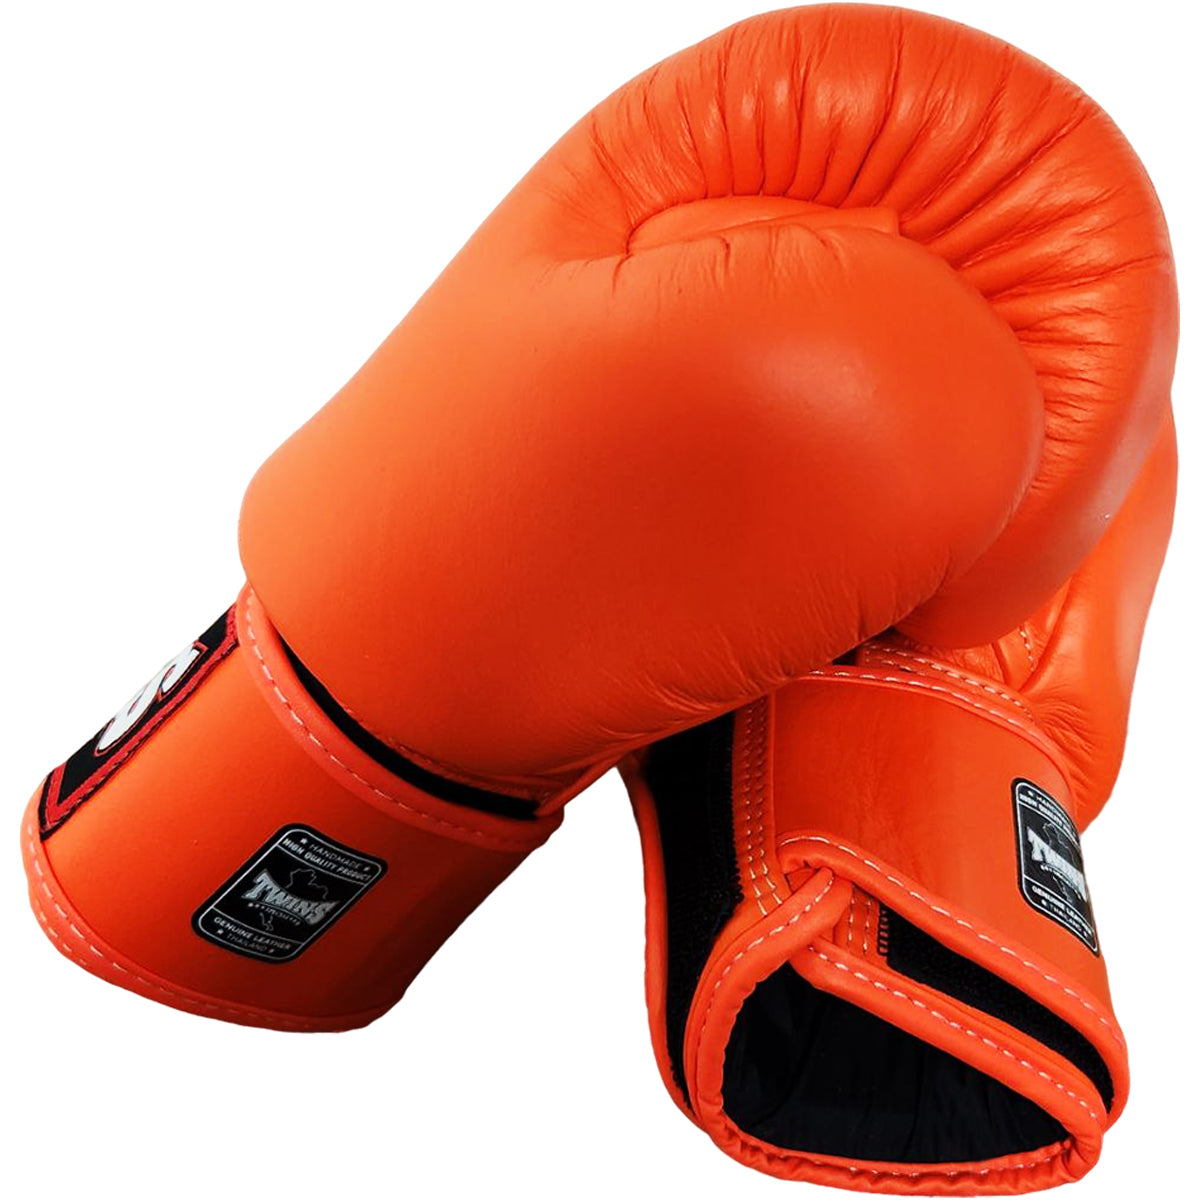 Boxing Gloves Twins Special BGVL3 Orange